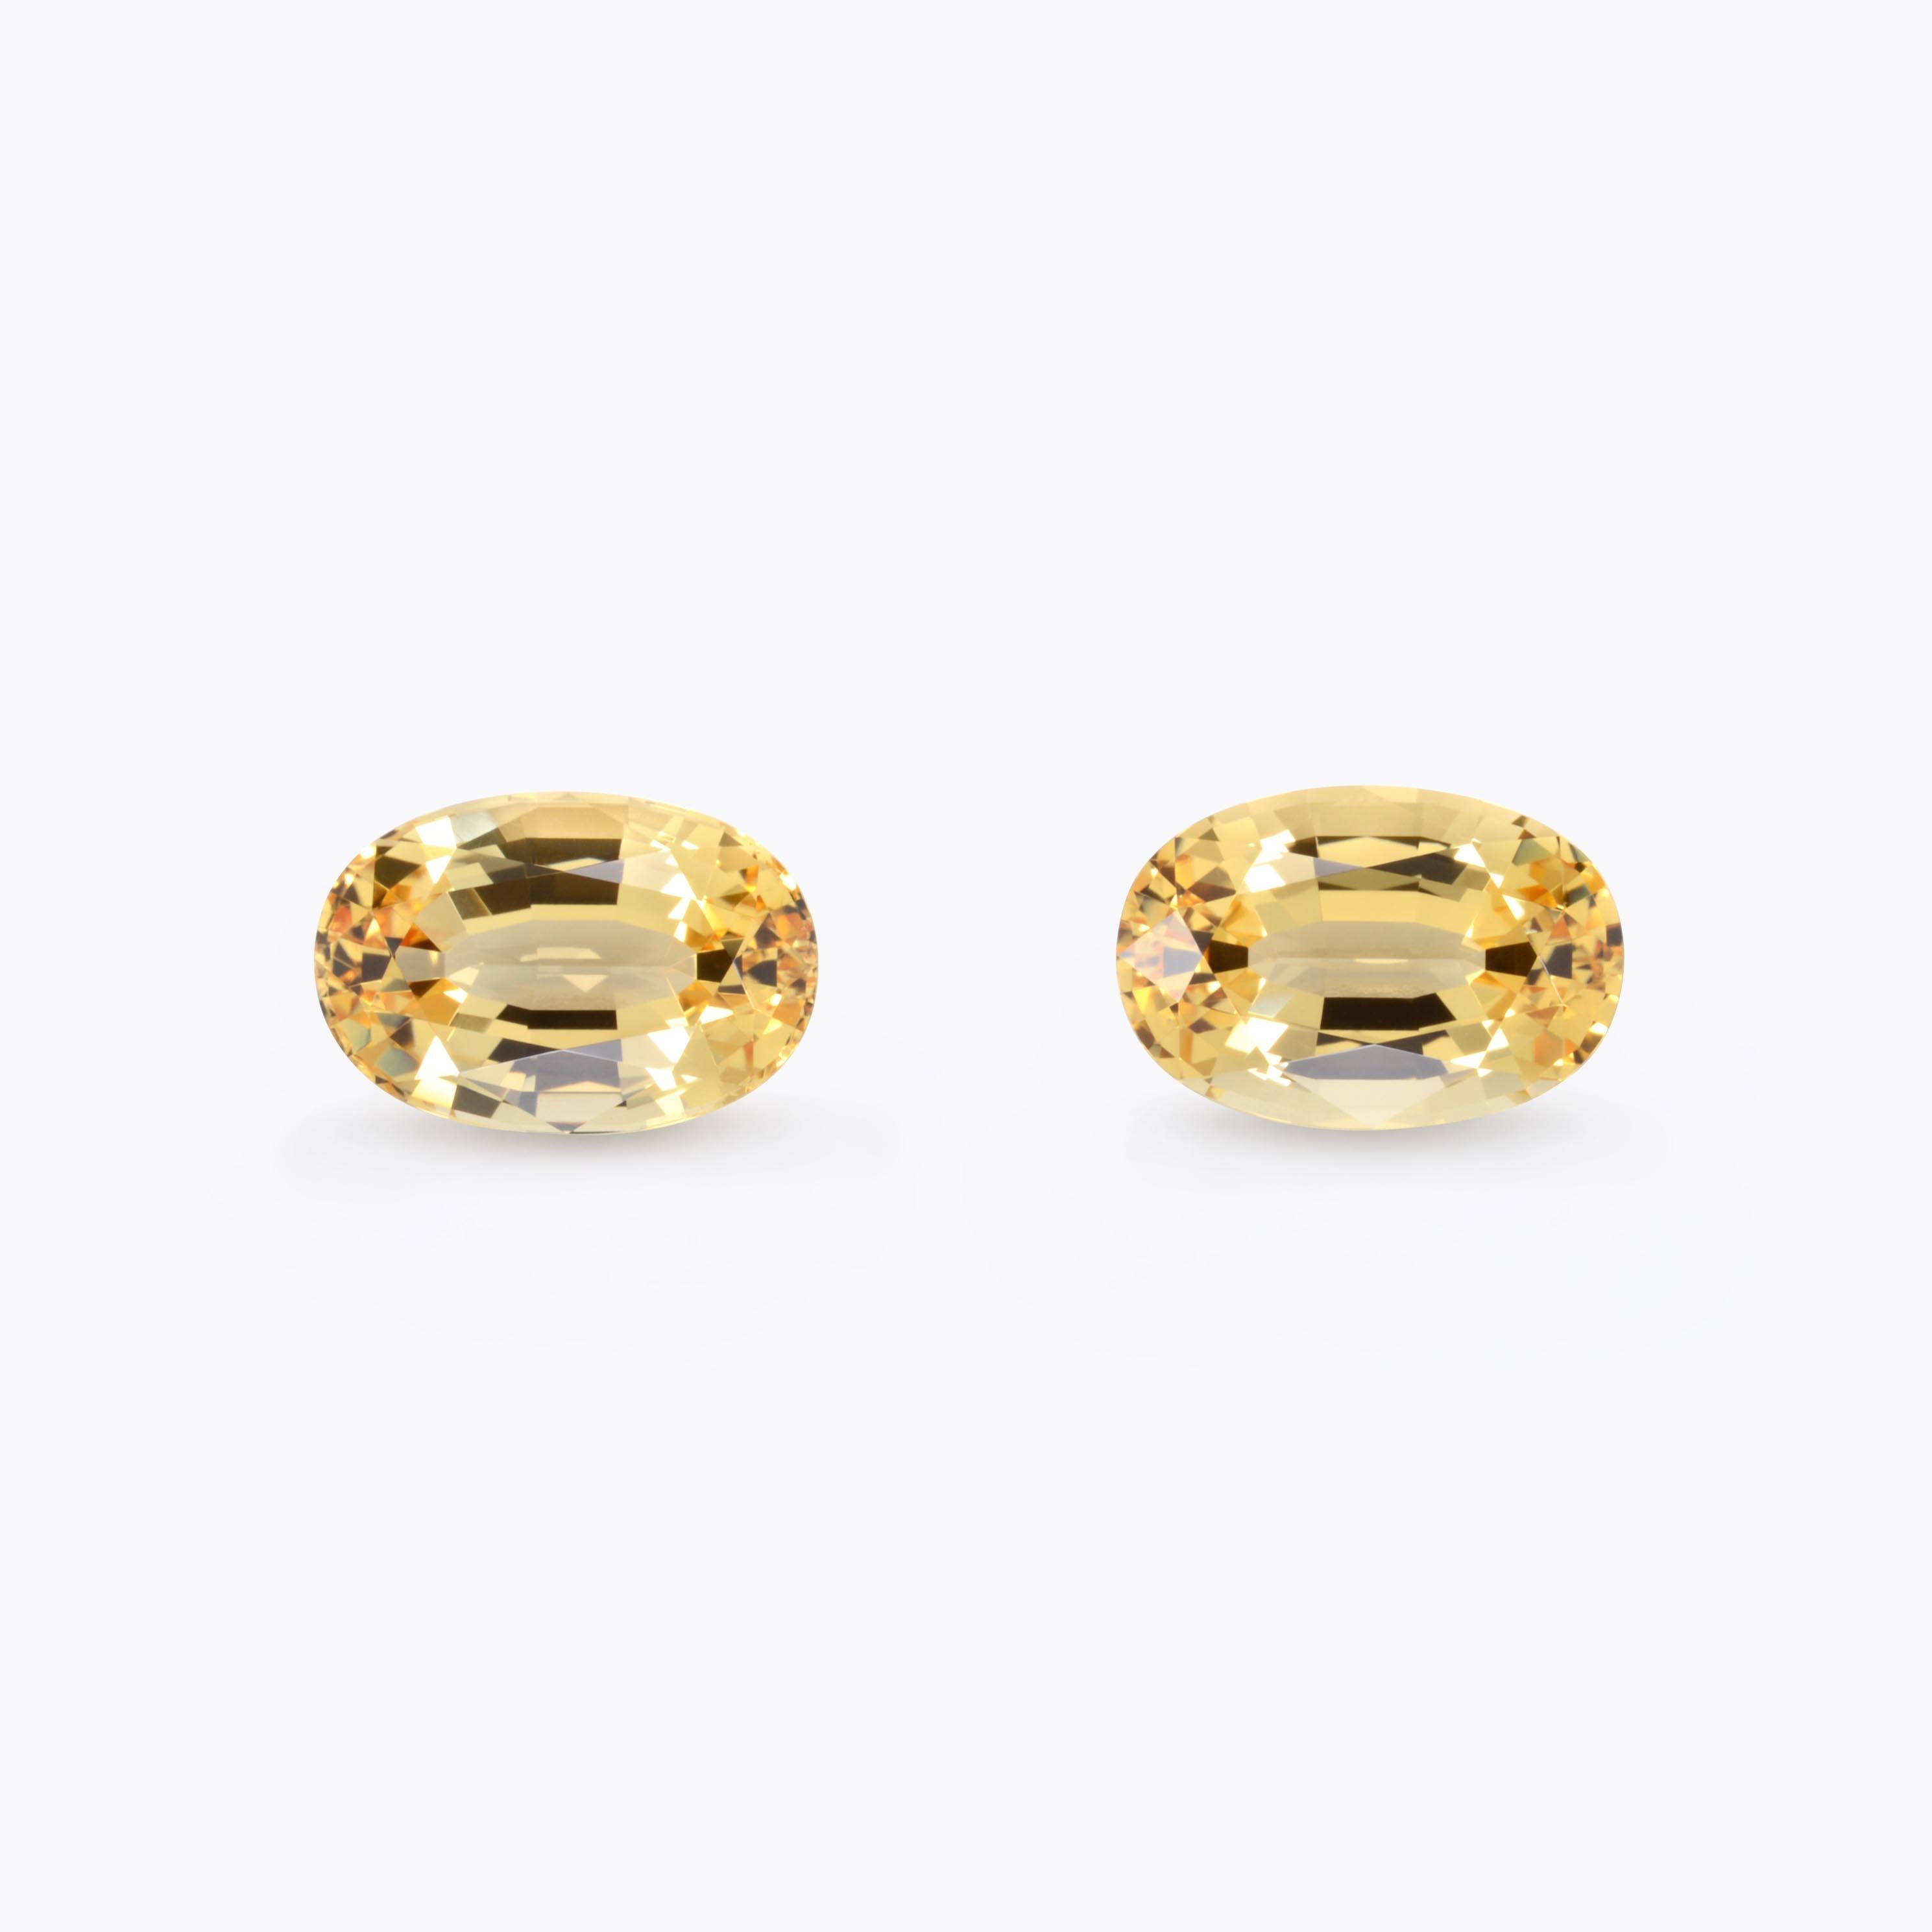 Oval Cut Imperial Topaz Earring Gemstones 10.80 Carat Oval Loose Gems For Sale